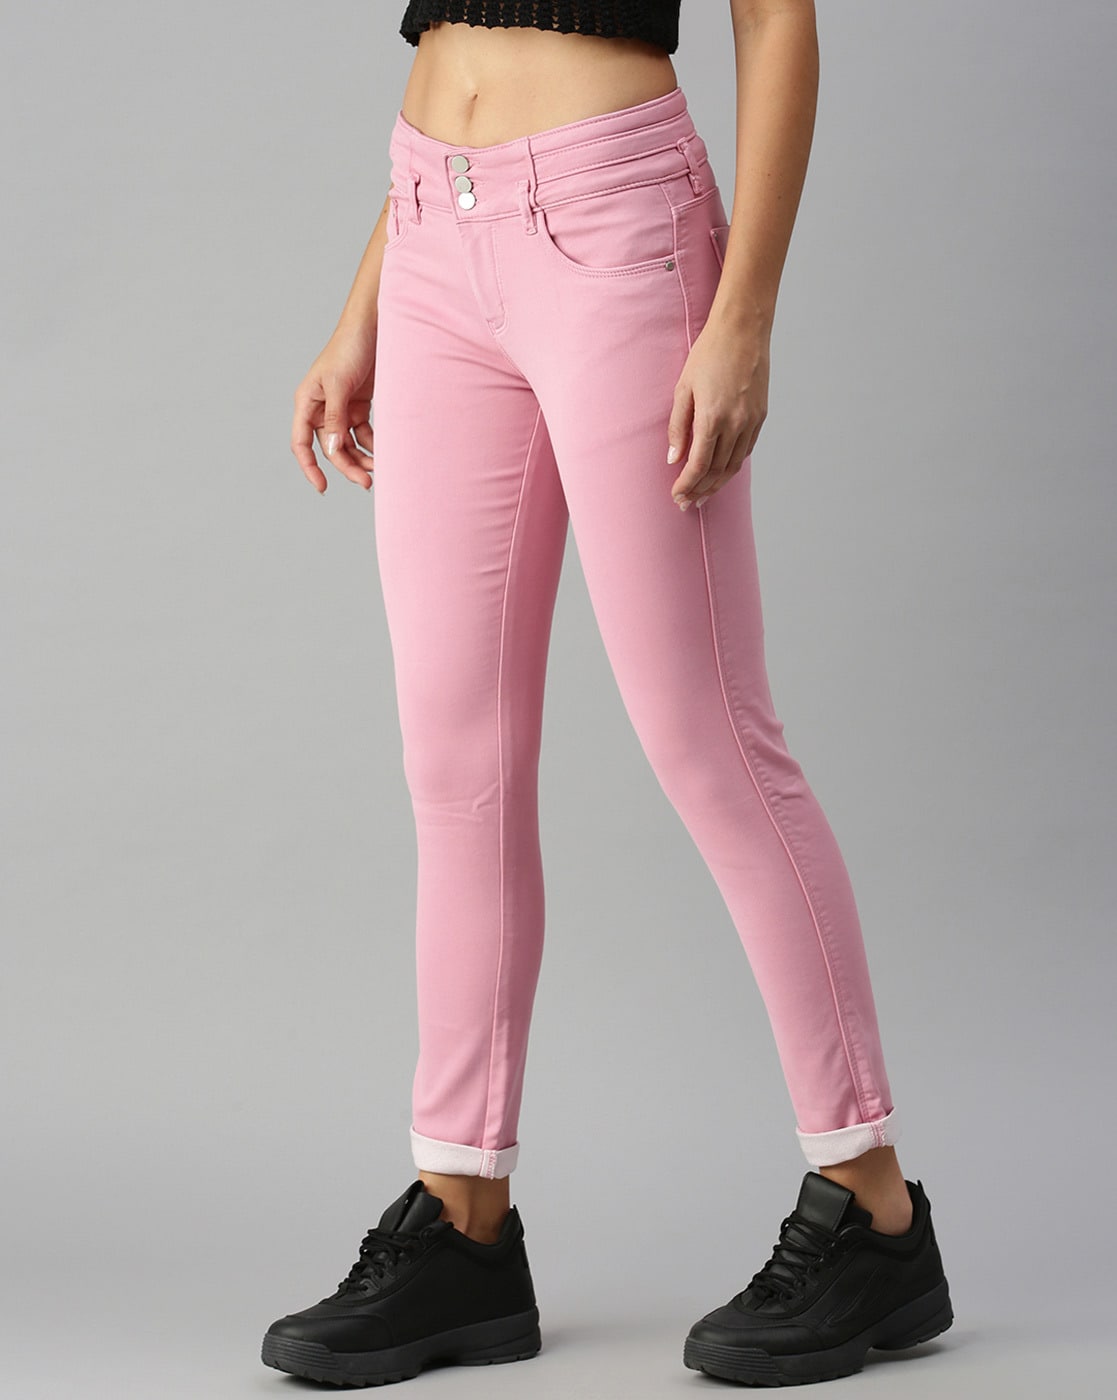 Banned Pastel Goth Pastel Pink and Mint Split Leg Skinny Jean Pants (S) -  SludgeLife